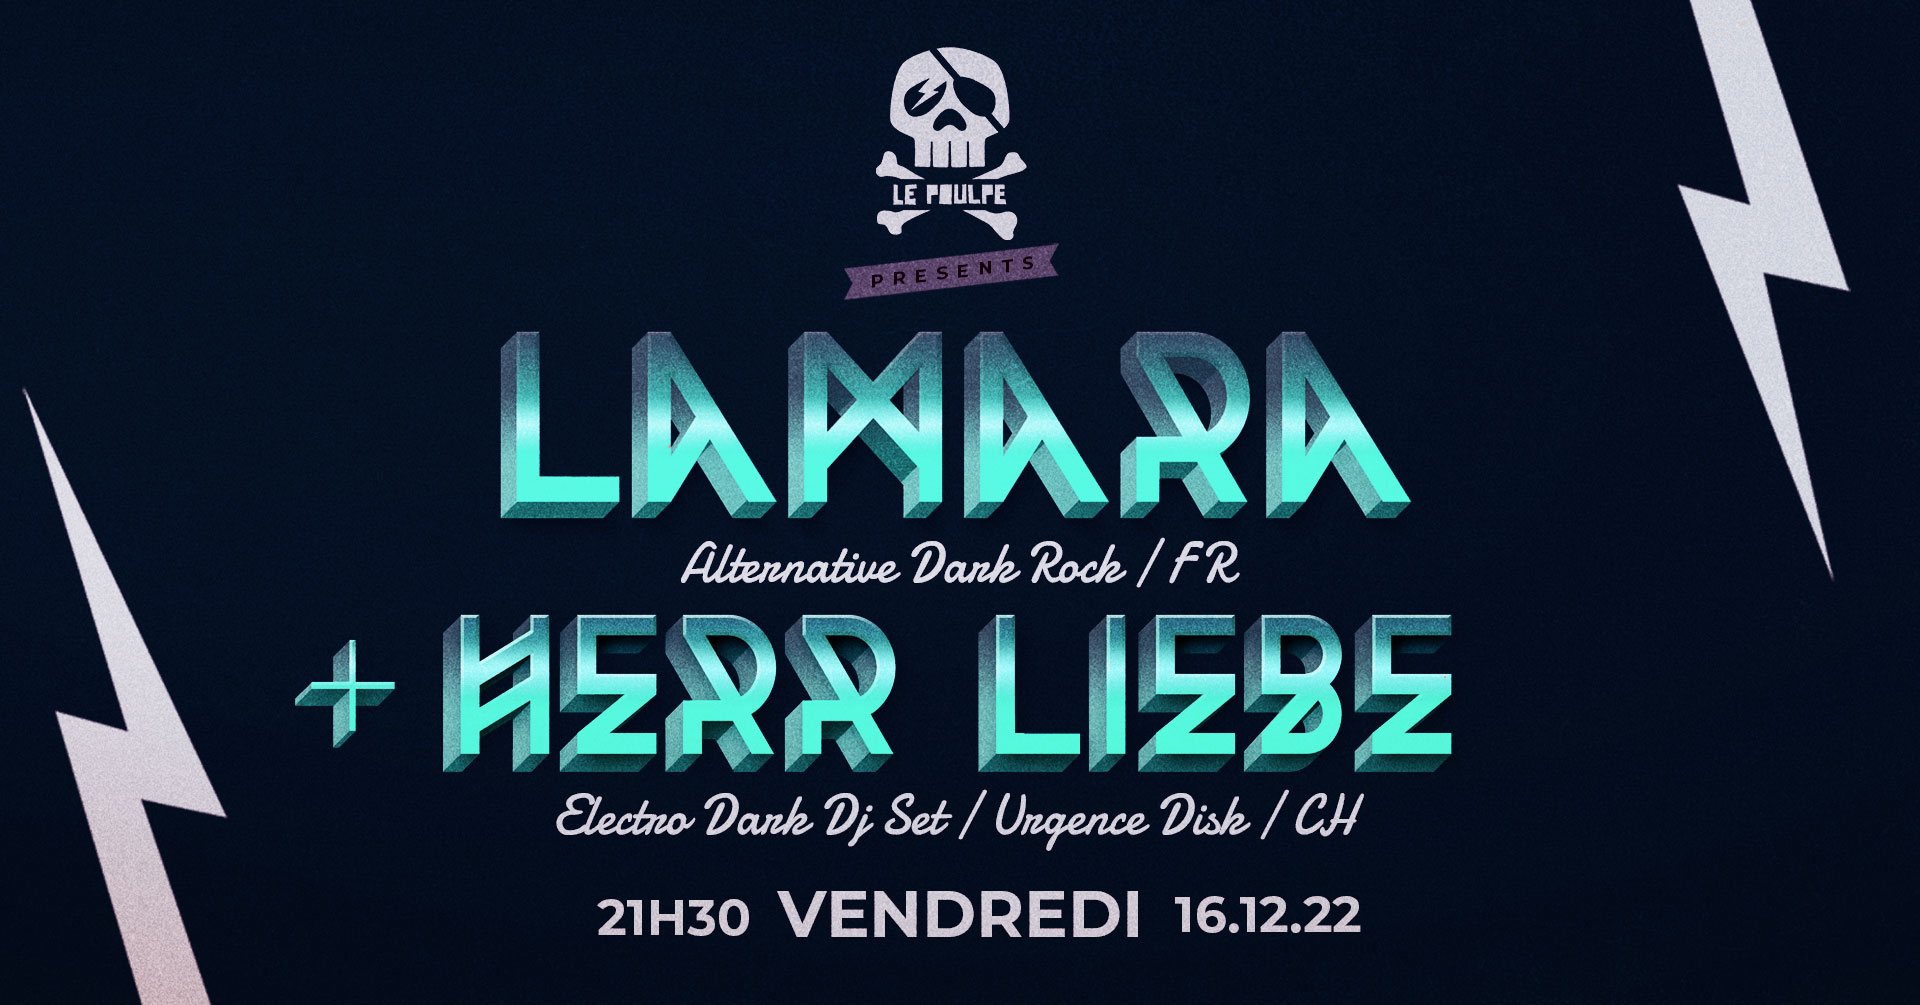 Lamara (Alternative Dark Rock) + Herr Liebe (Dj Set Electro Dark) @ Le Poulpe